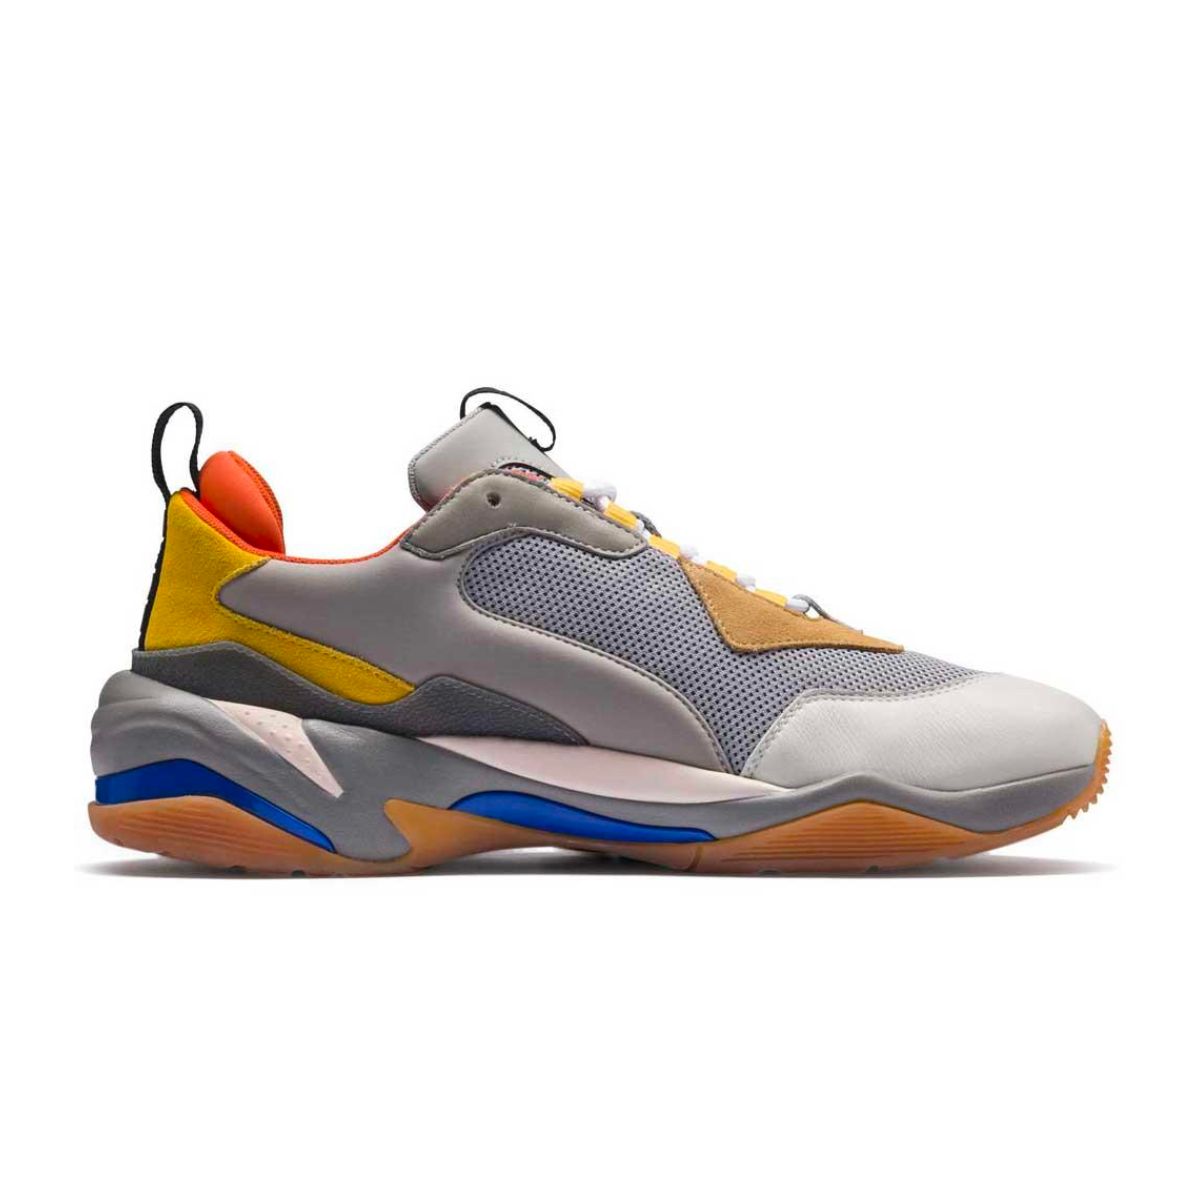 Puma Thunder Spectra Replacement Shoelaces - Kicks Shoelaces